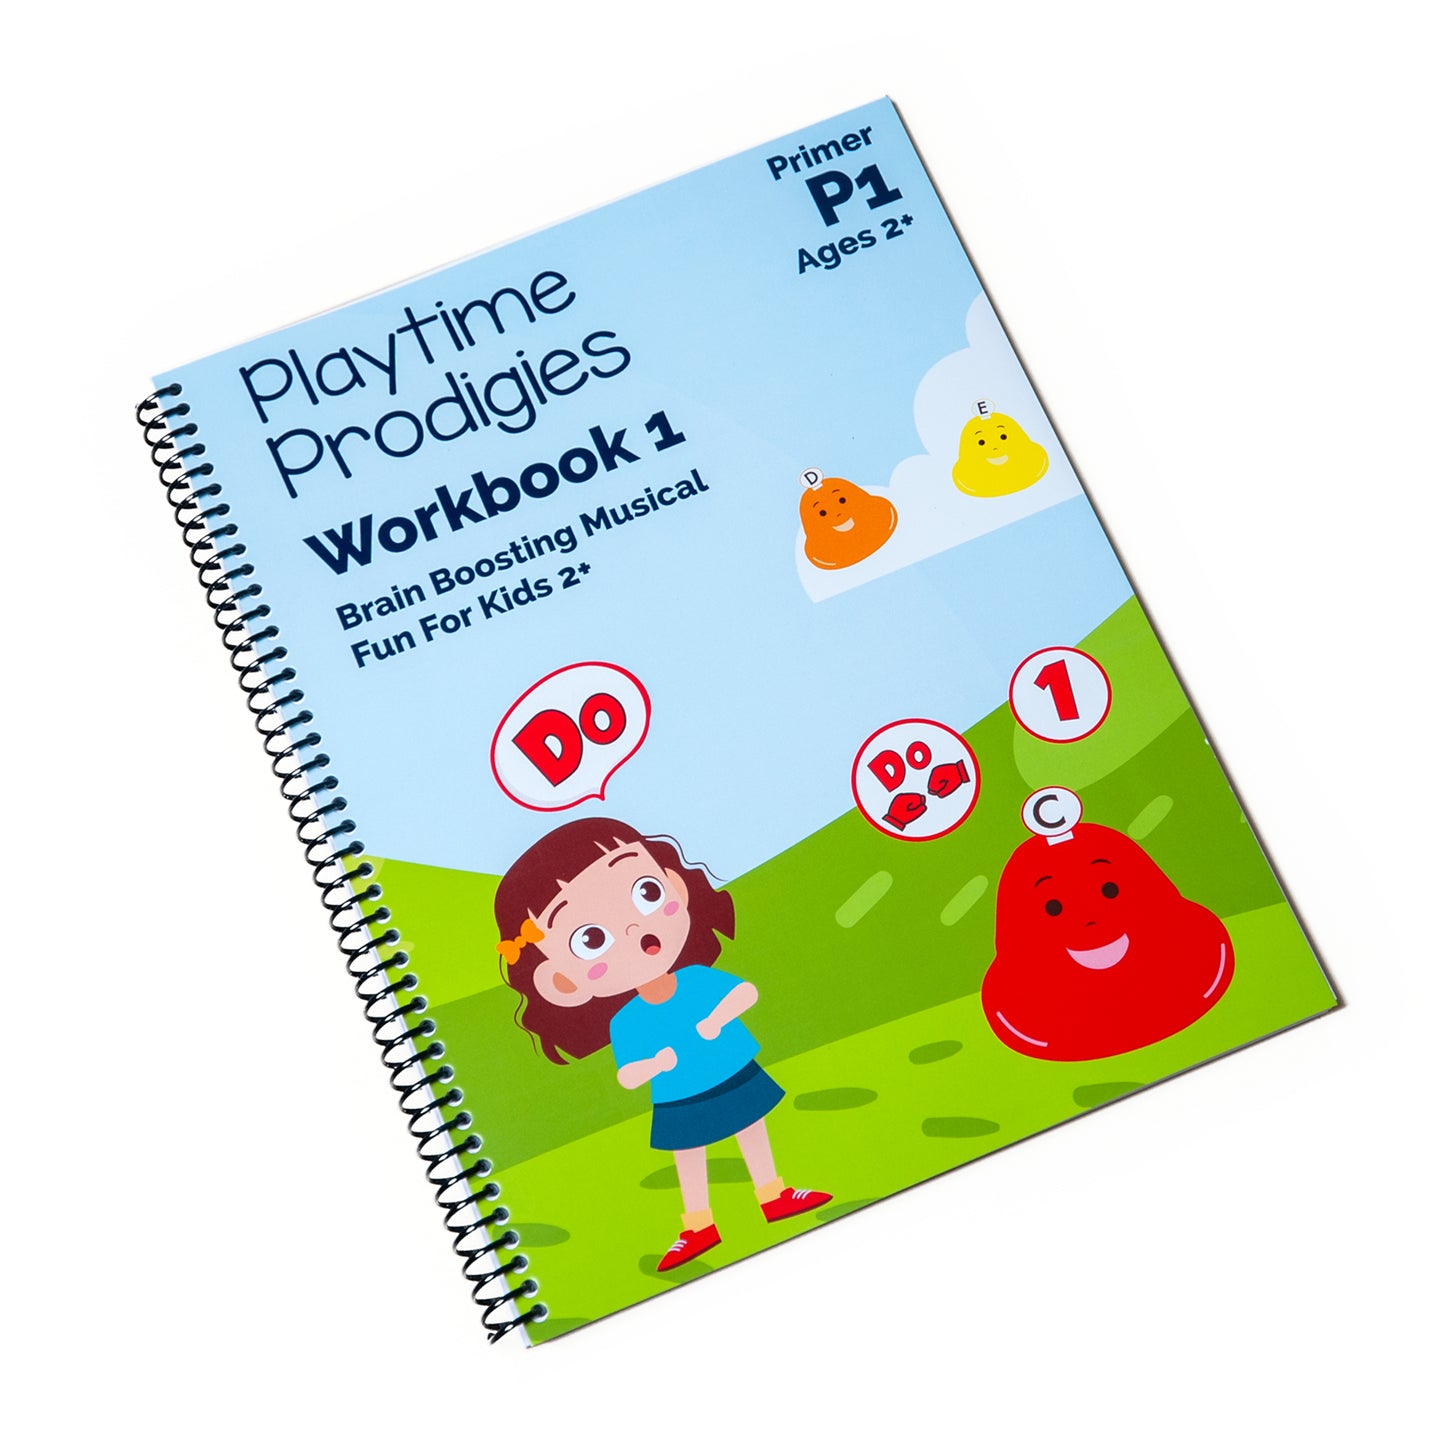 Playtime Prodigies Workbook (Primer)